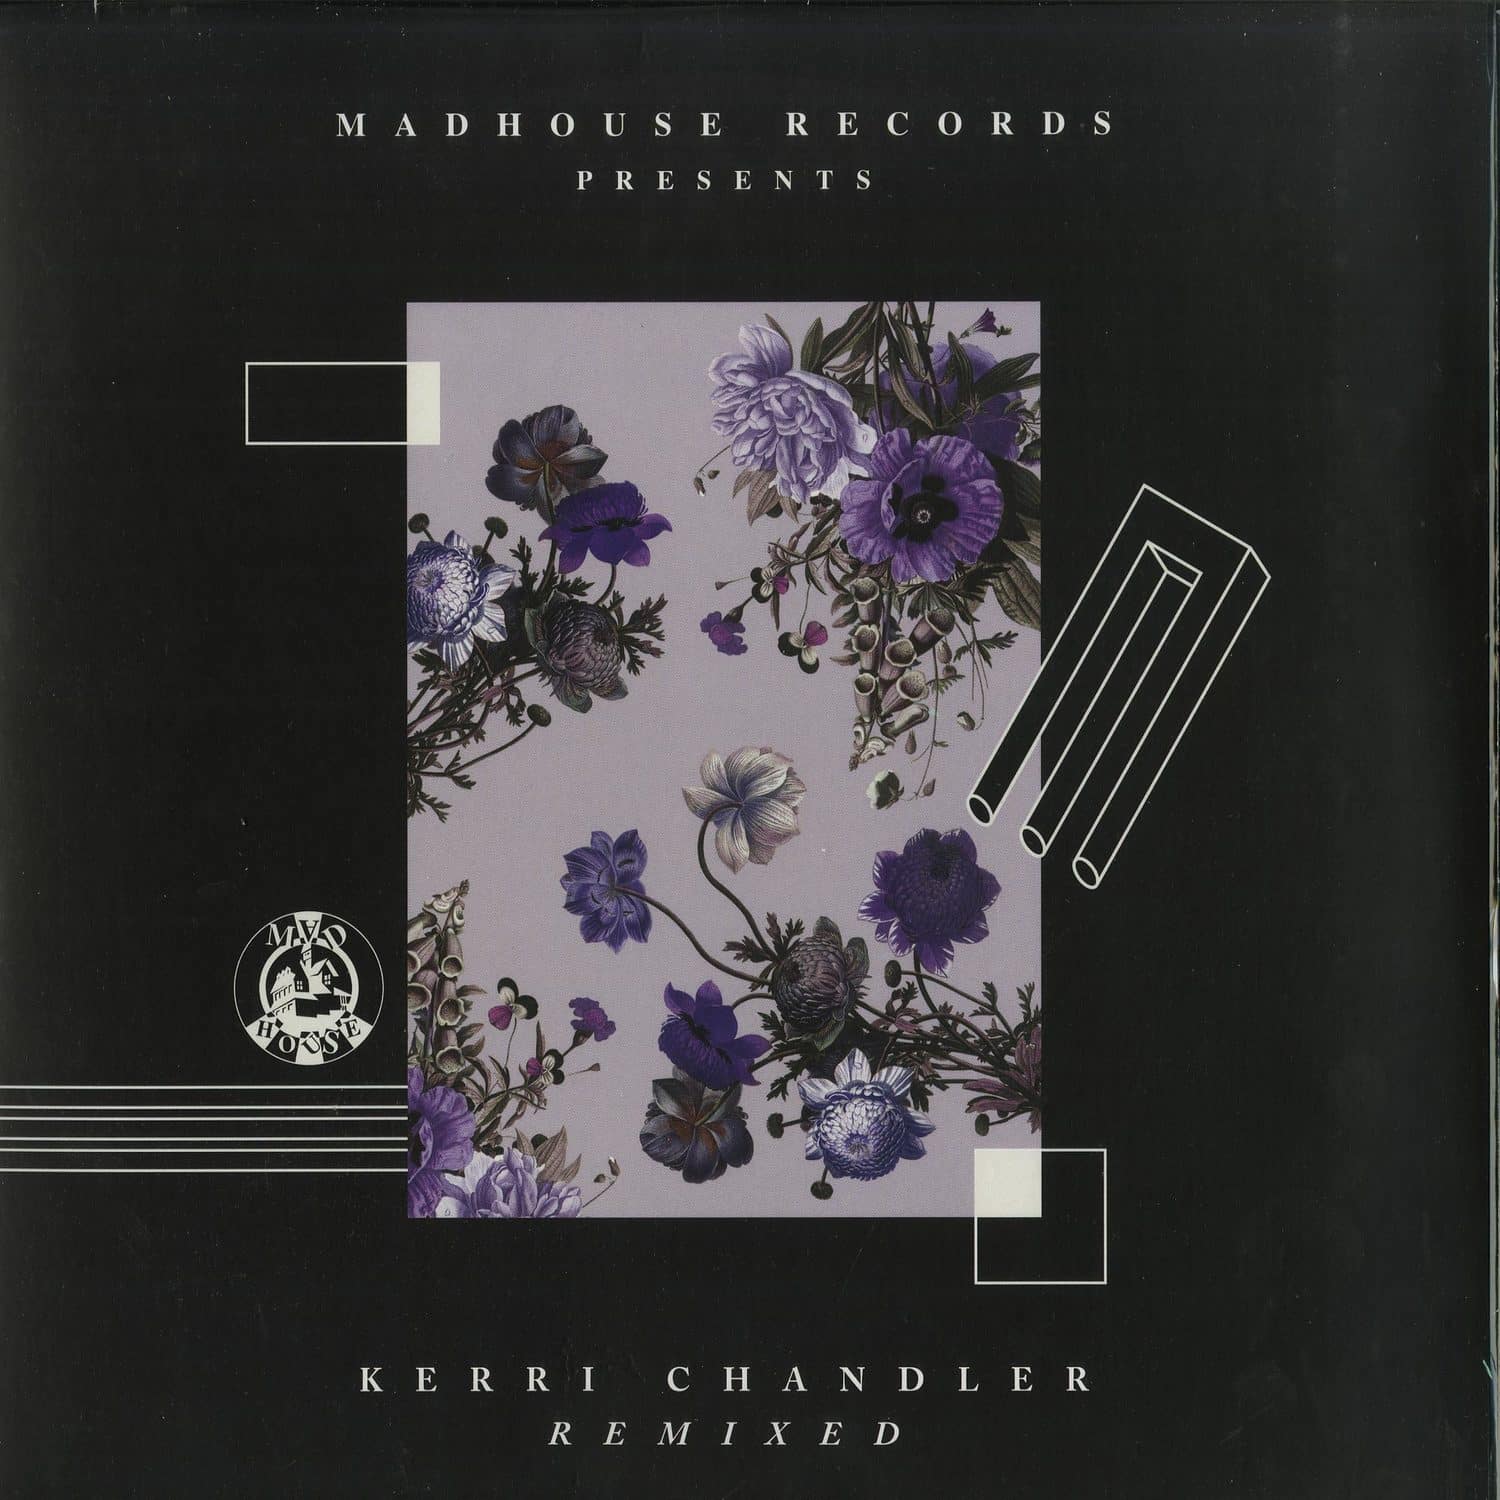 Kerri Chandler / Matrix / Dreamer G - MADHOUSE PRESENTS KERRI CHANDLER REMIXED 